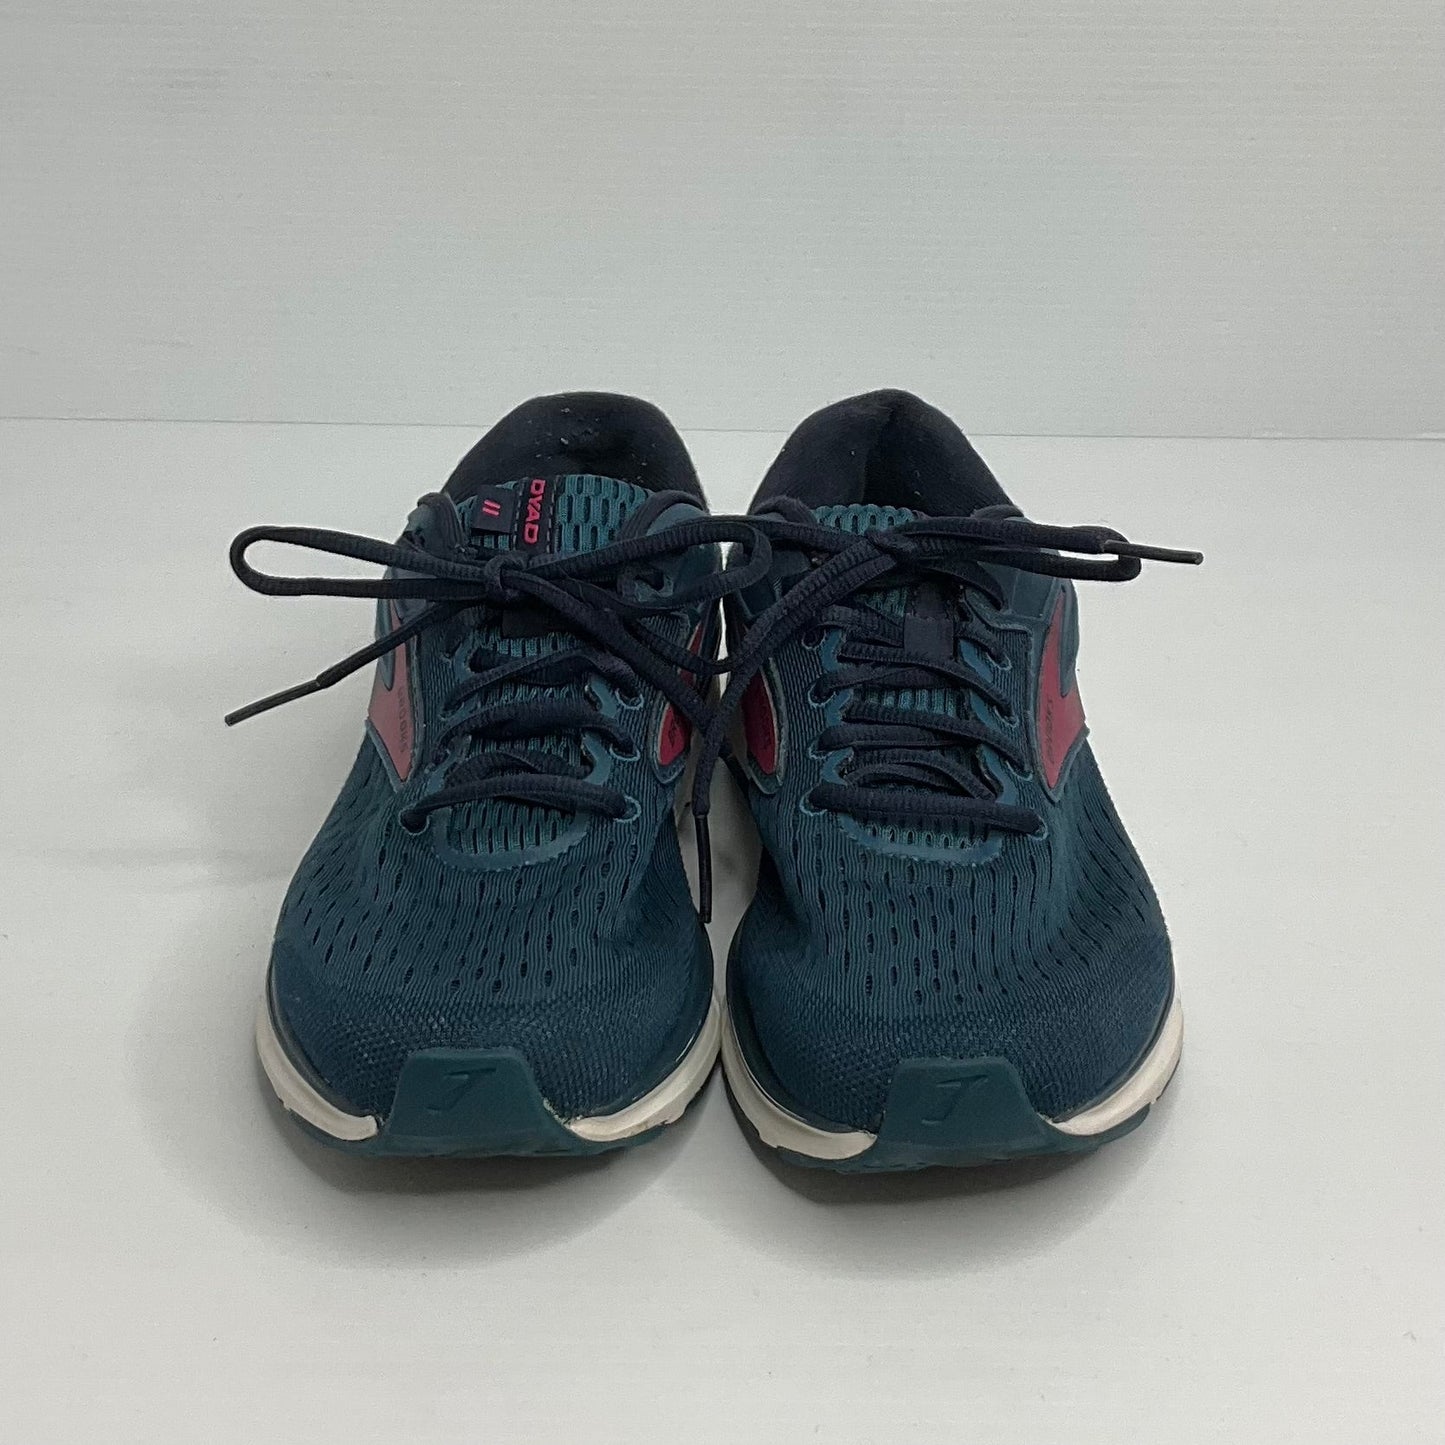 Navy Shoes Athletic Brooks, Size 8.5